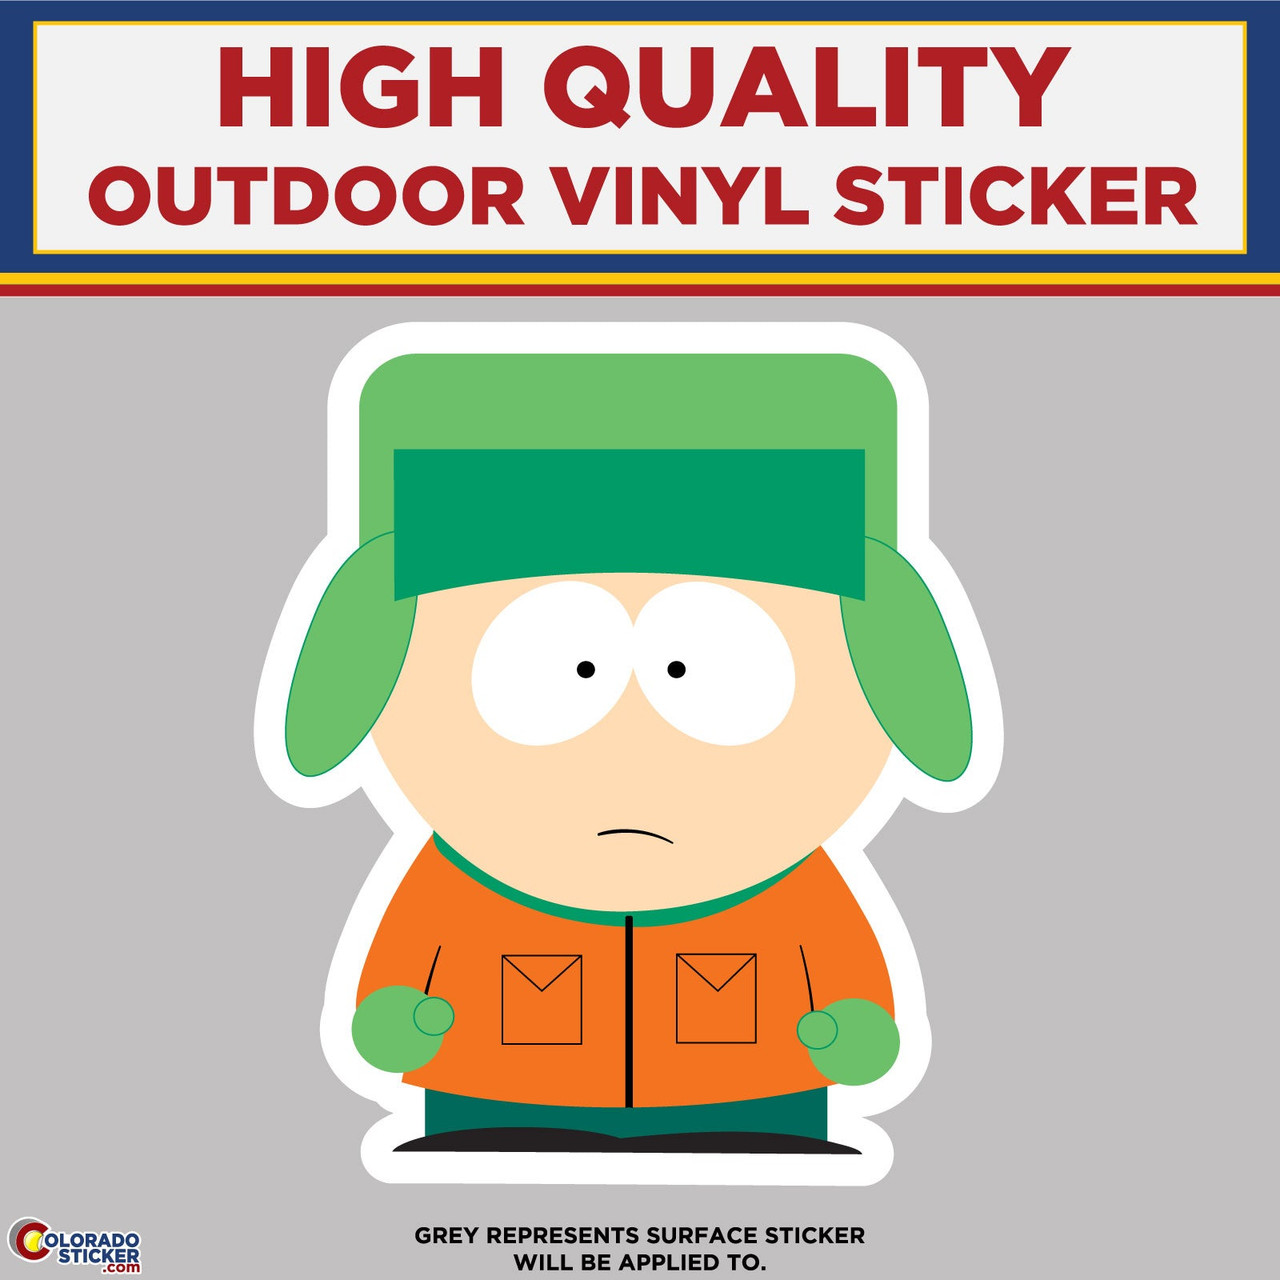 South Park - South Park - Sticker